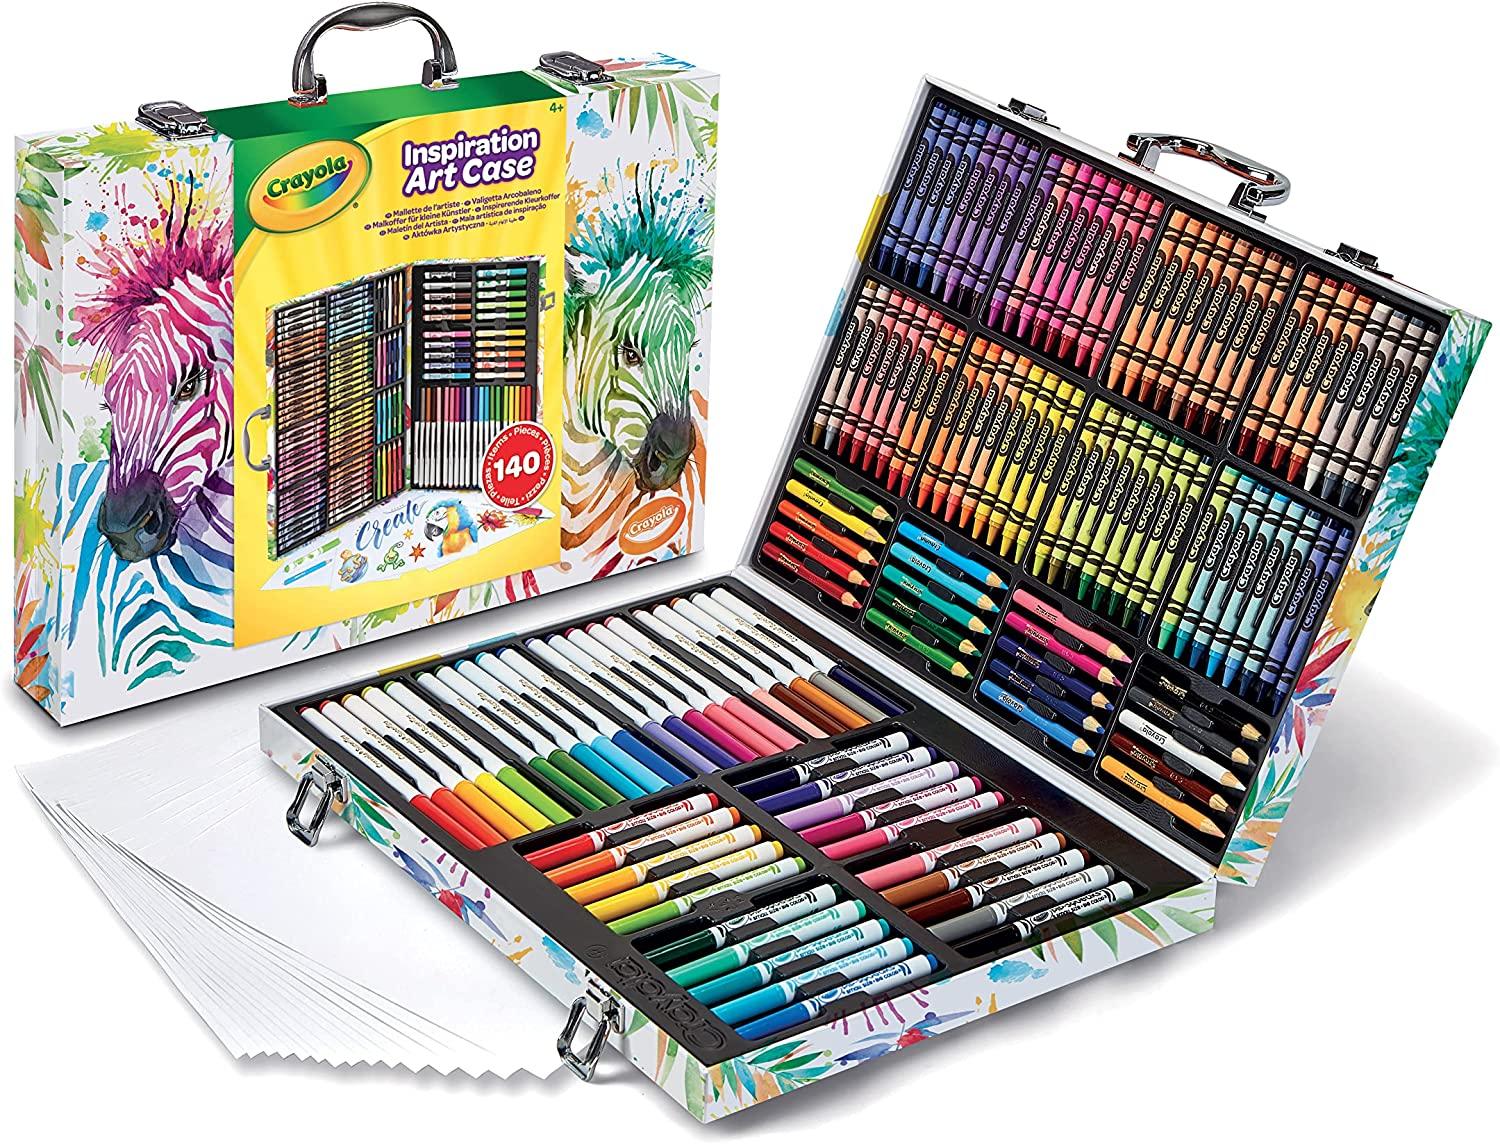 https://www.dontwasteyourmoney.com/wp-content/uploads/2021/06/crayola-inspiration-art-case-coloring-set-140-piece-1.jpg